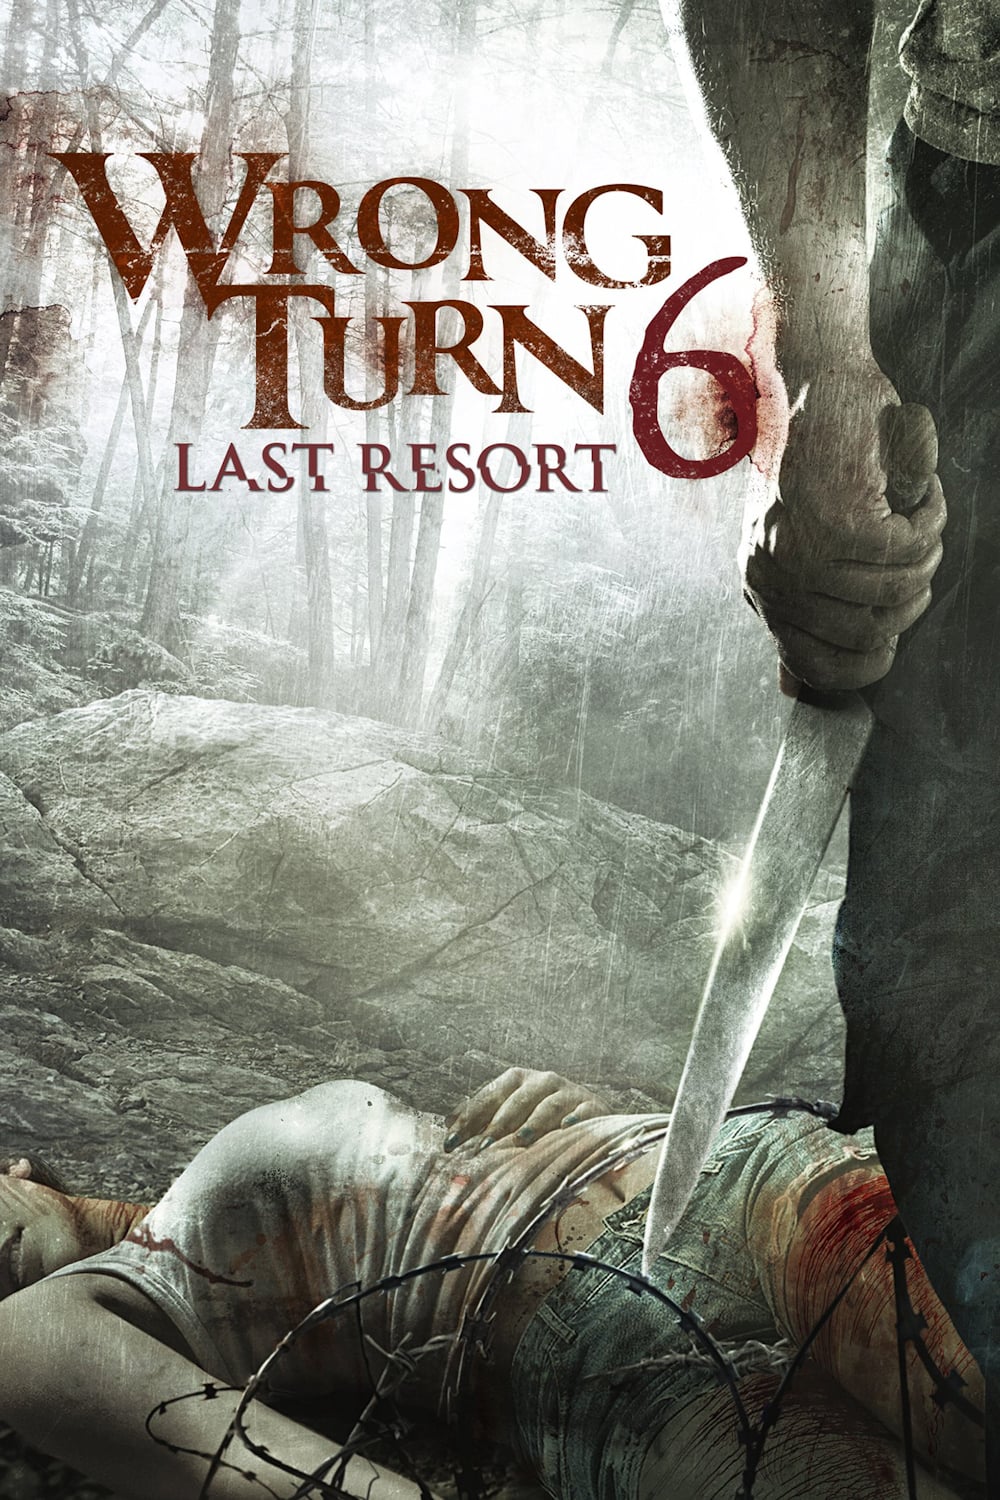 Wrong Turn 6: Last Resort [HD] (2014)